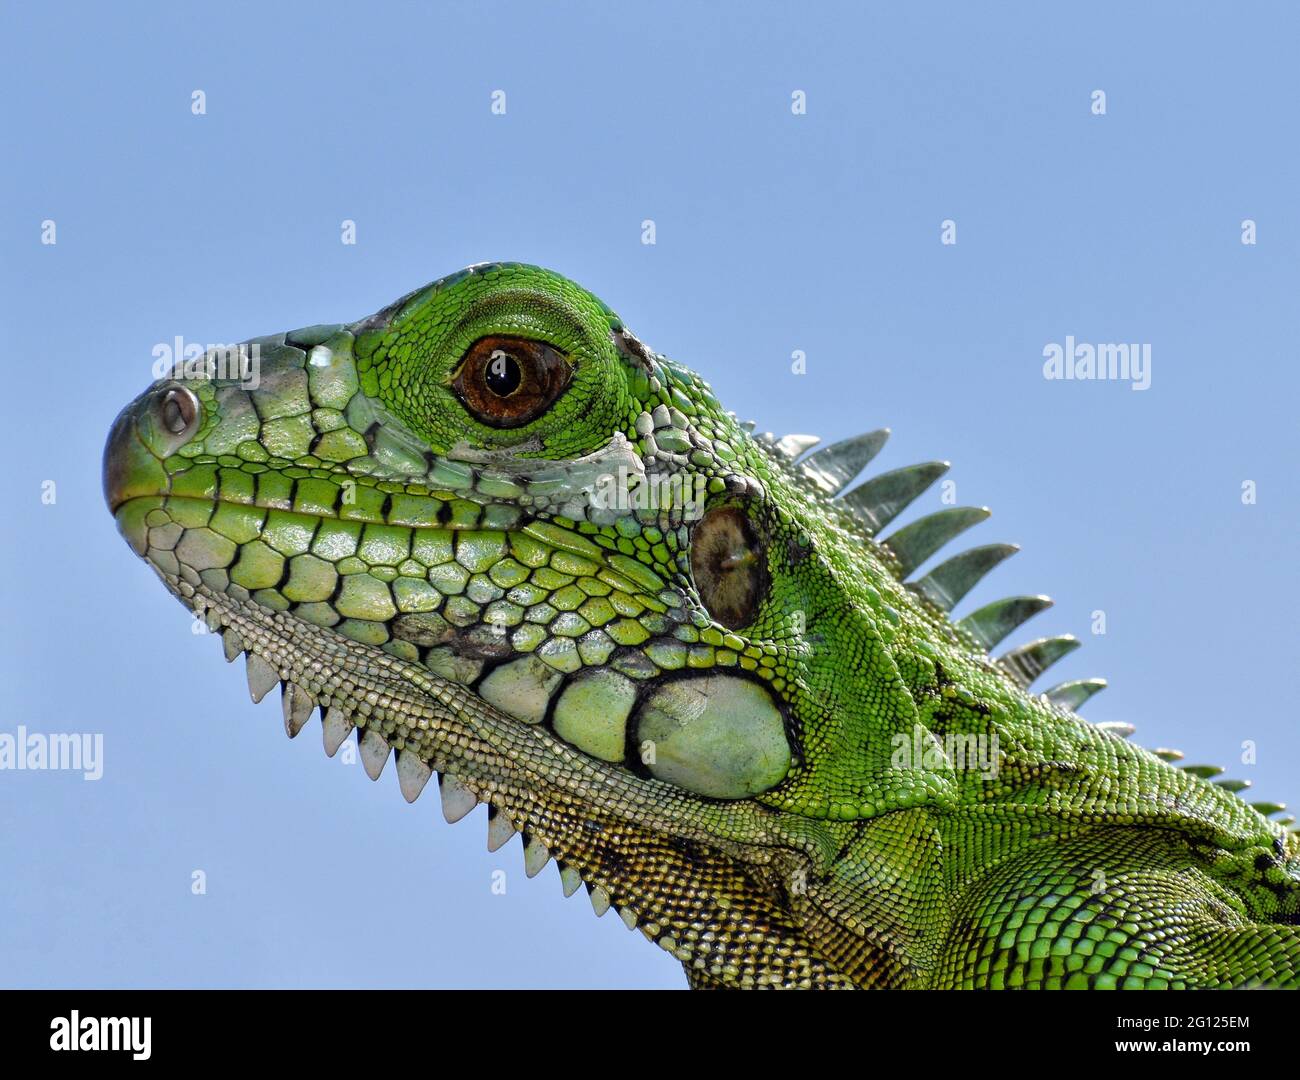 A Green iguana in the wild, roaming a neighbourhood in Trinidad. Stock Photo